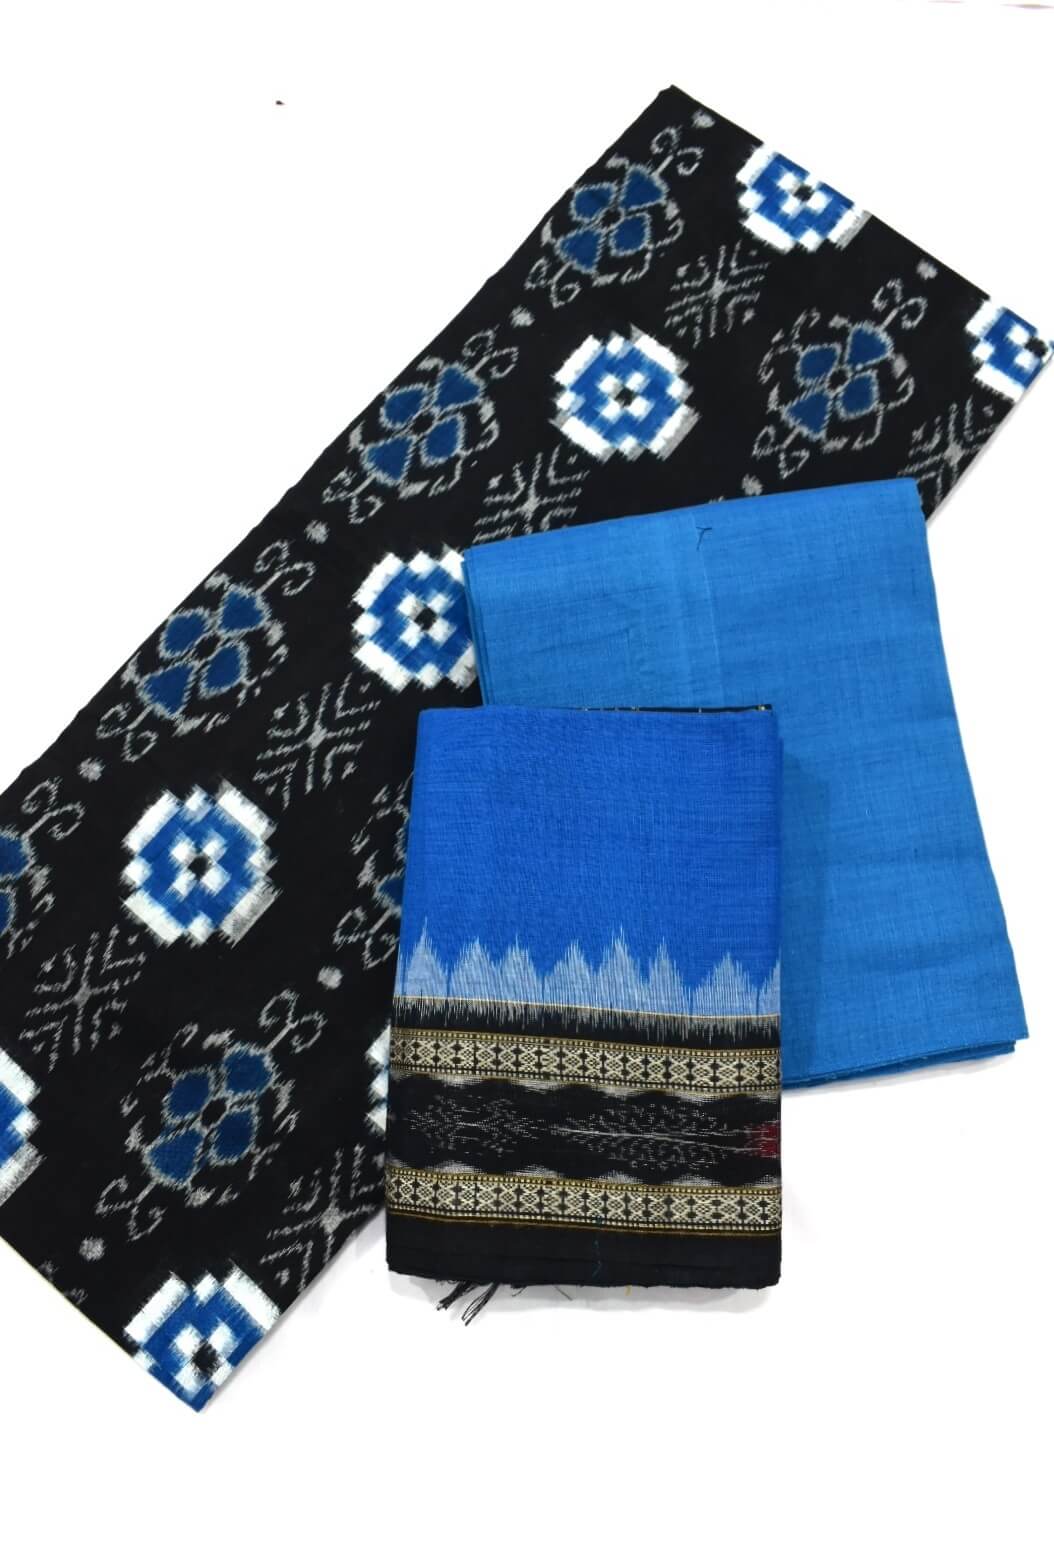 Black Colour Pasapali Design Sambalpuri Handloom Cotton Dress Materials ...